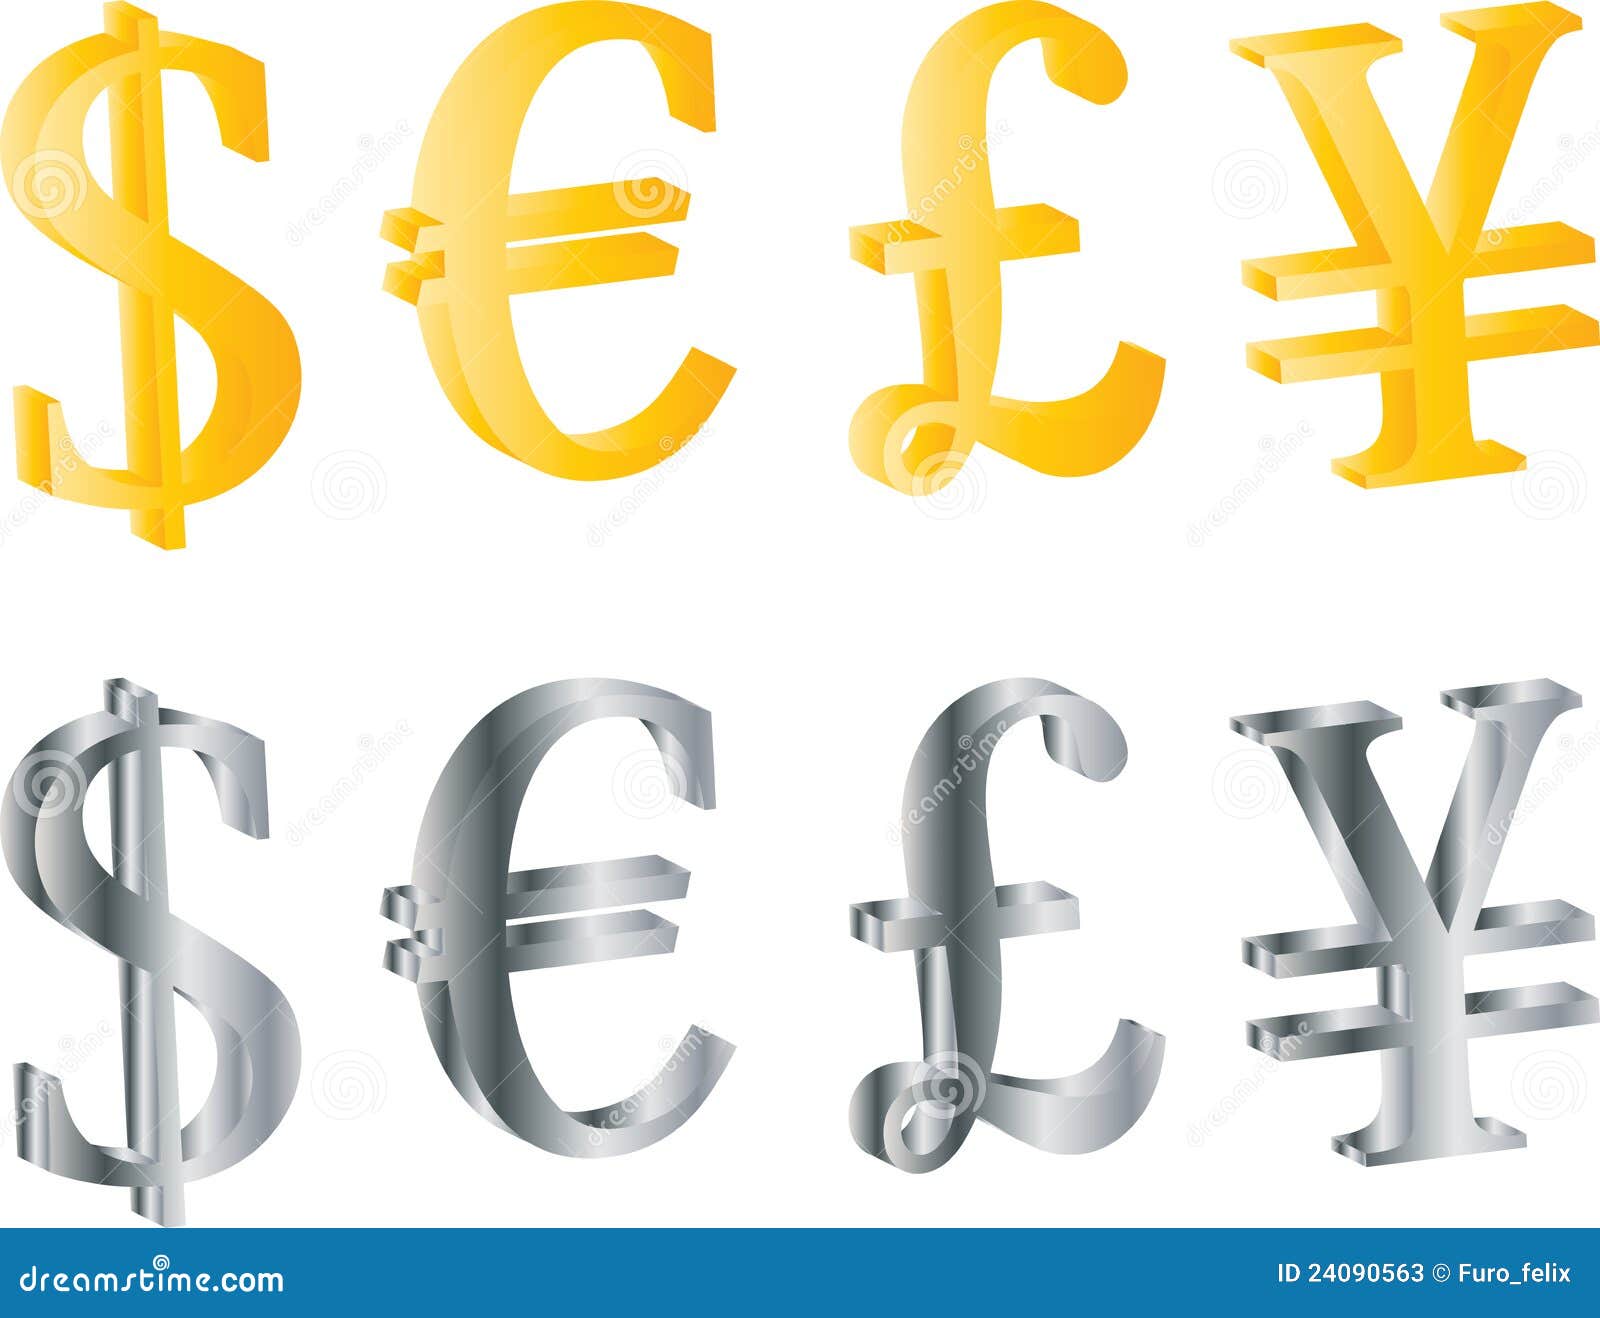 3 currencies. Символы валют. Знак доллара и евро. Значок доллара и других валют.